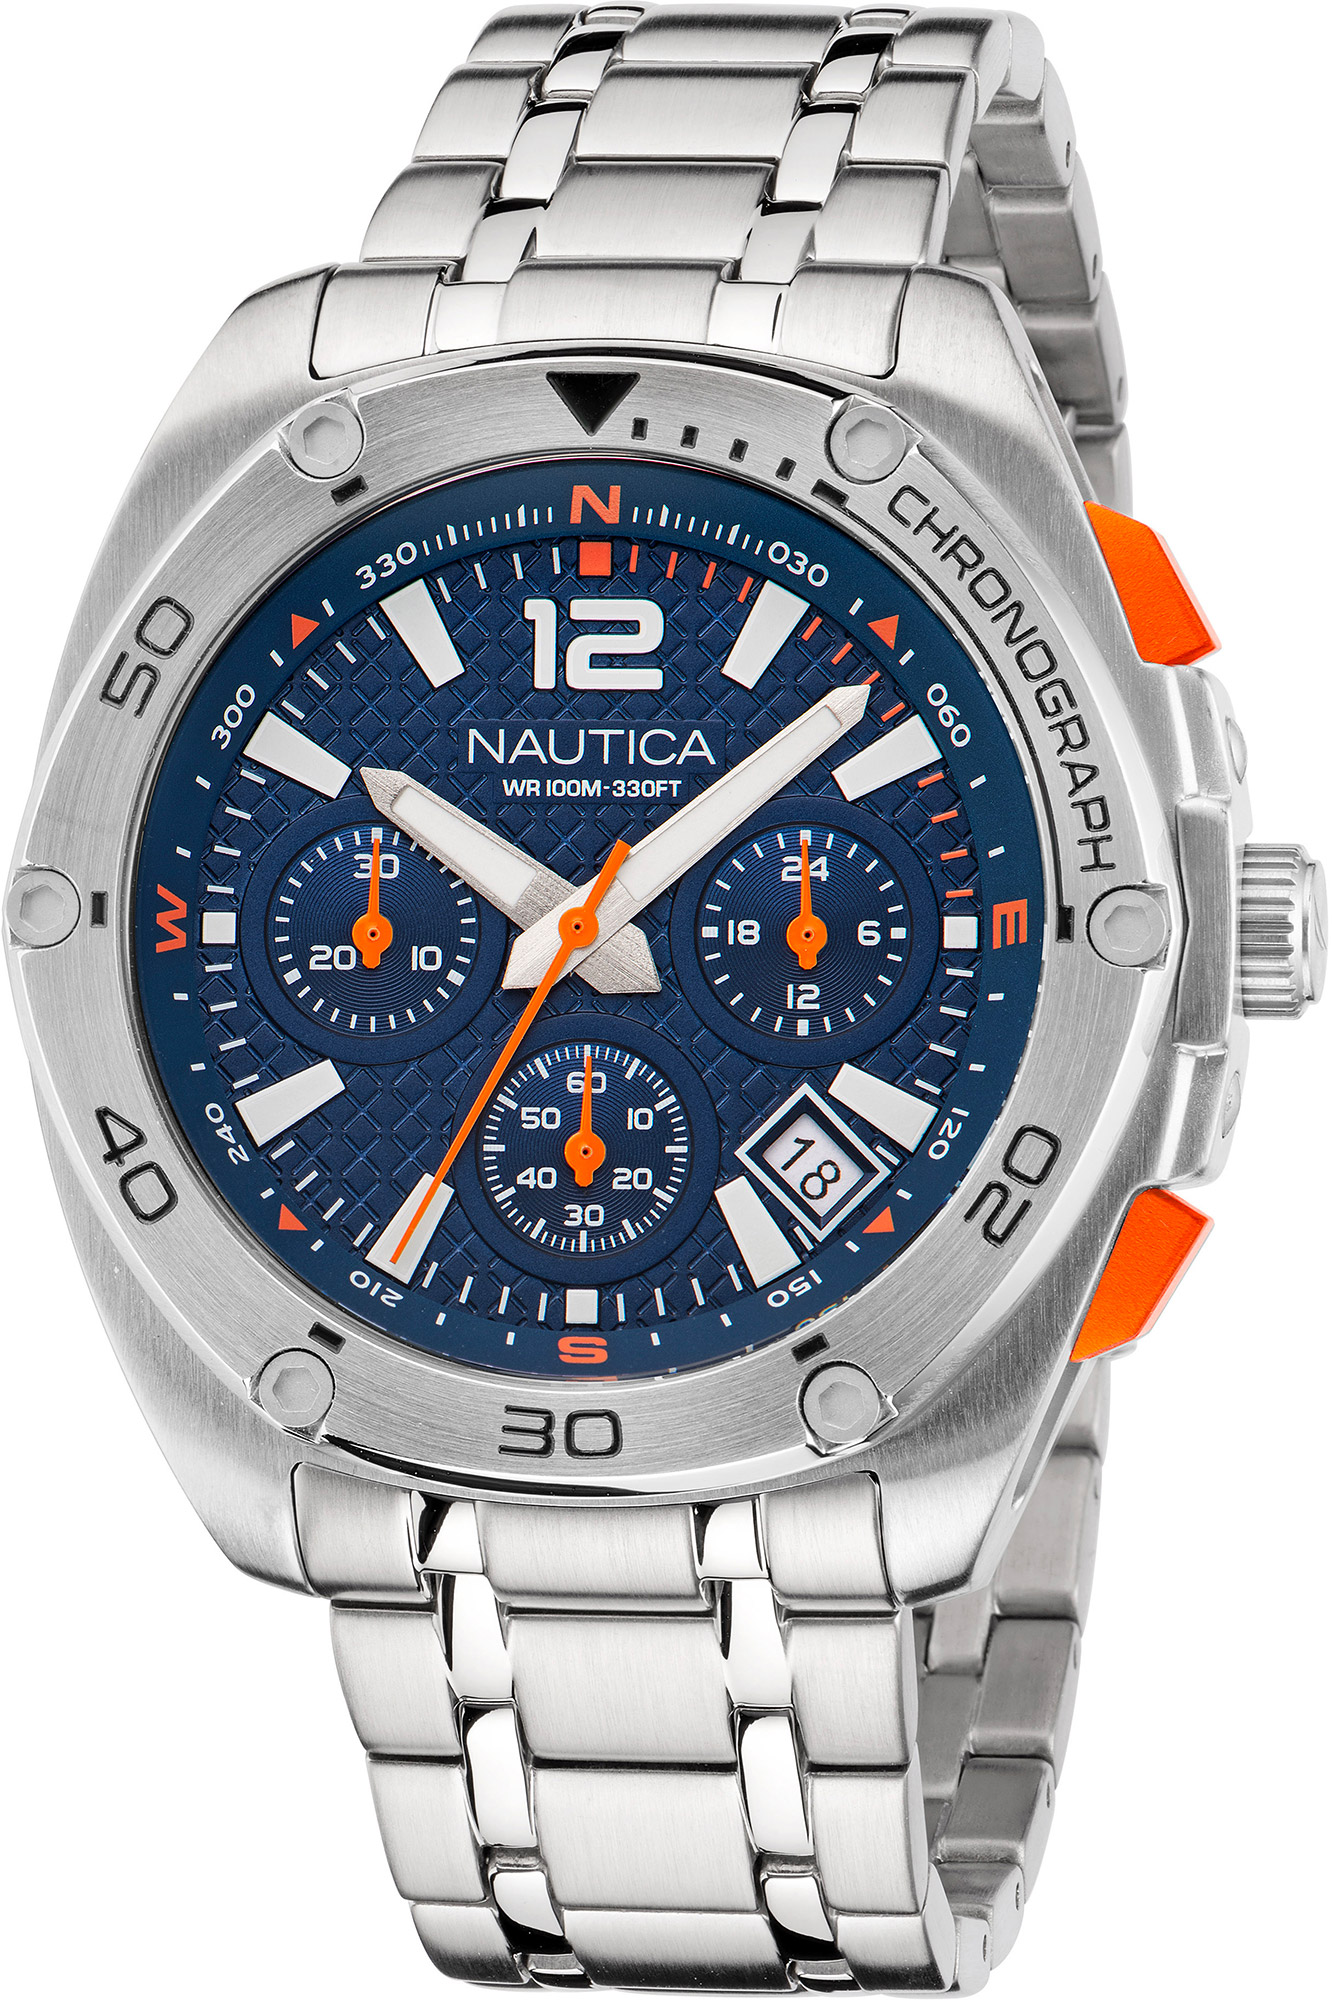 Watch Nautica naptcf212